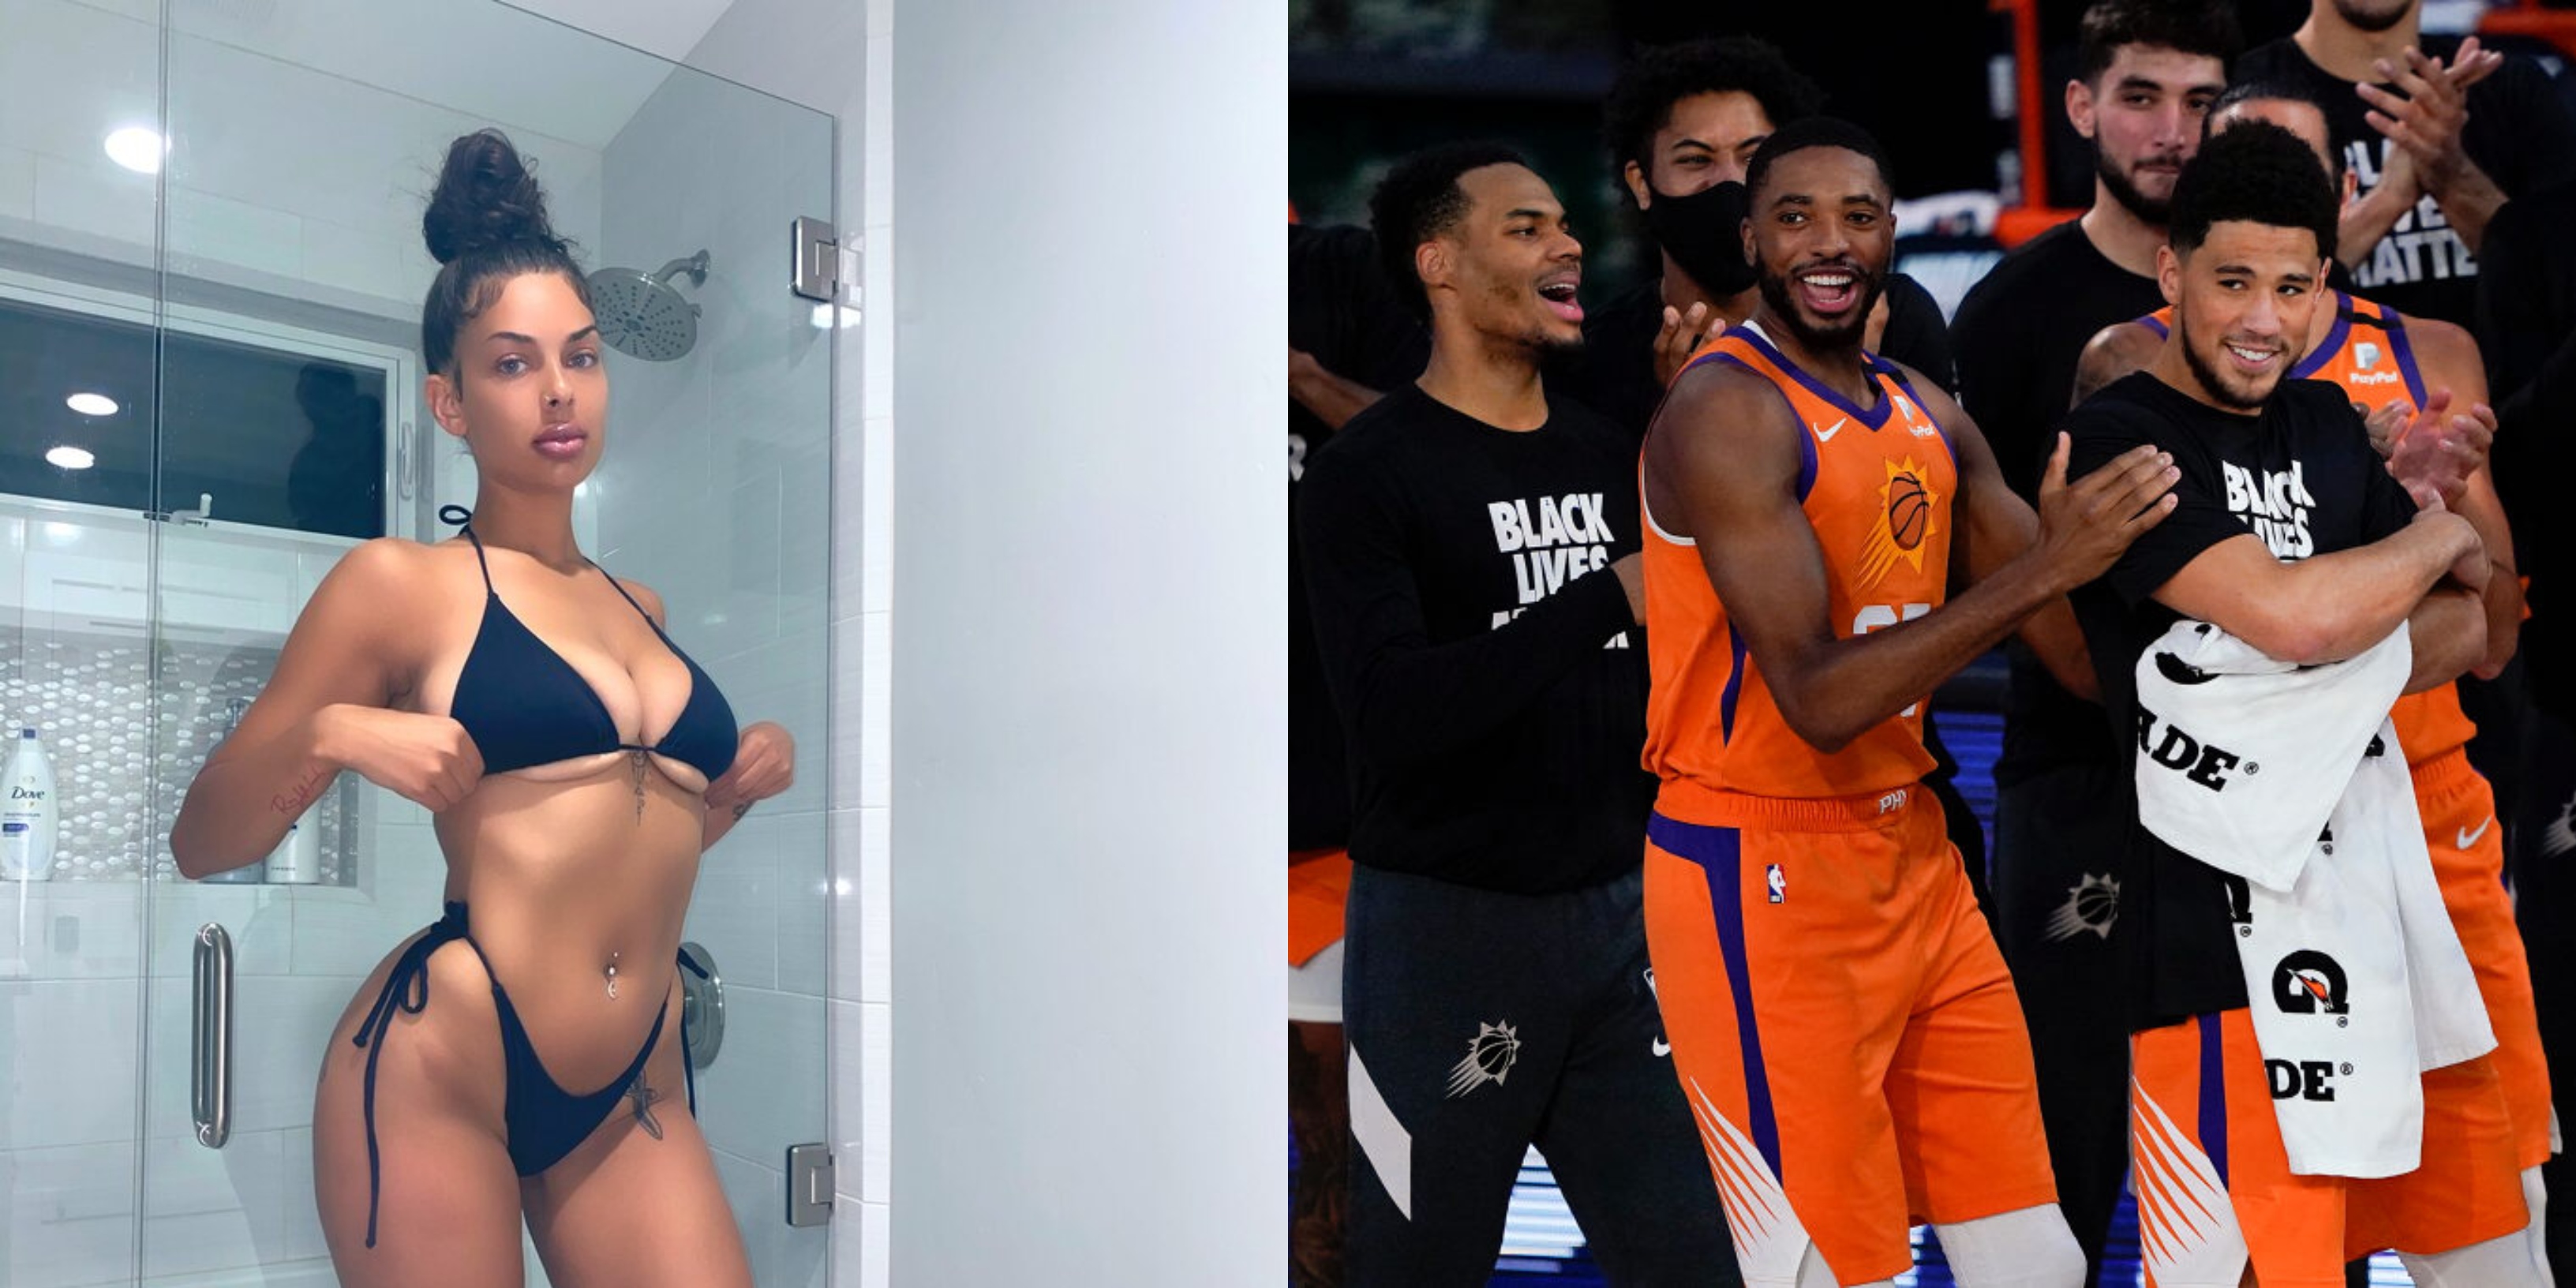 Knicks Instagram Models in Sexy Selfies